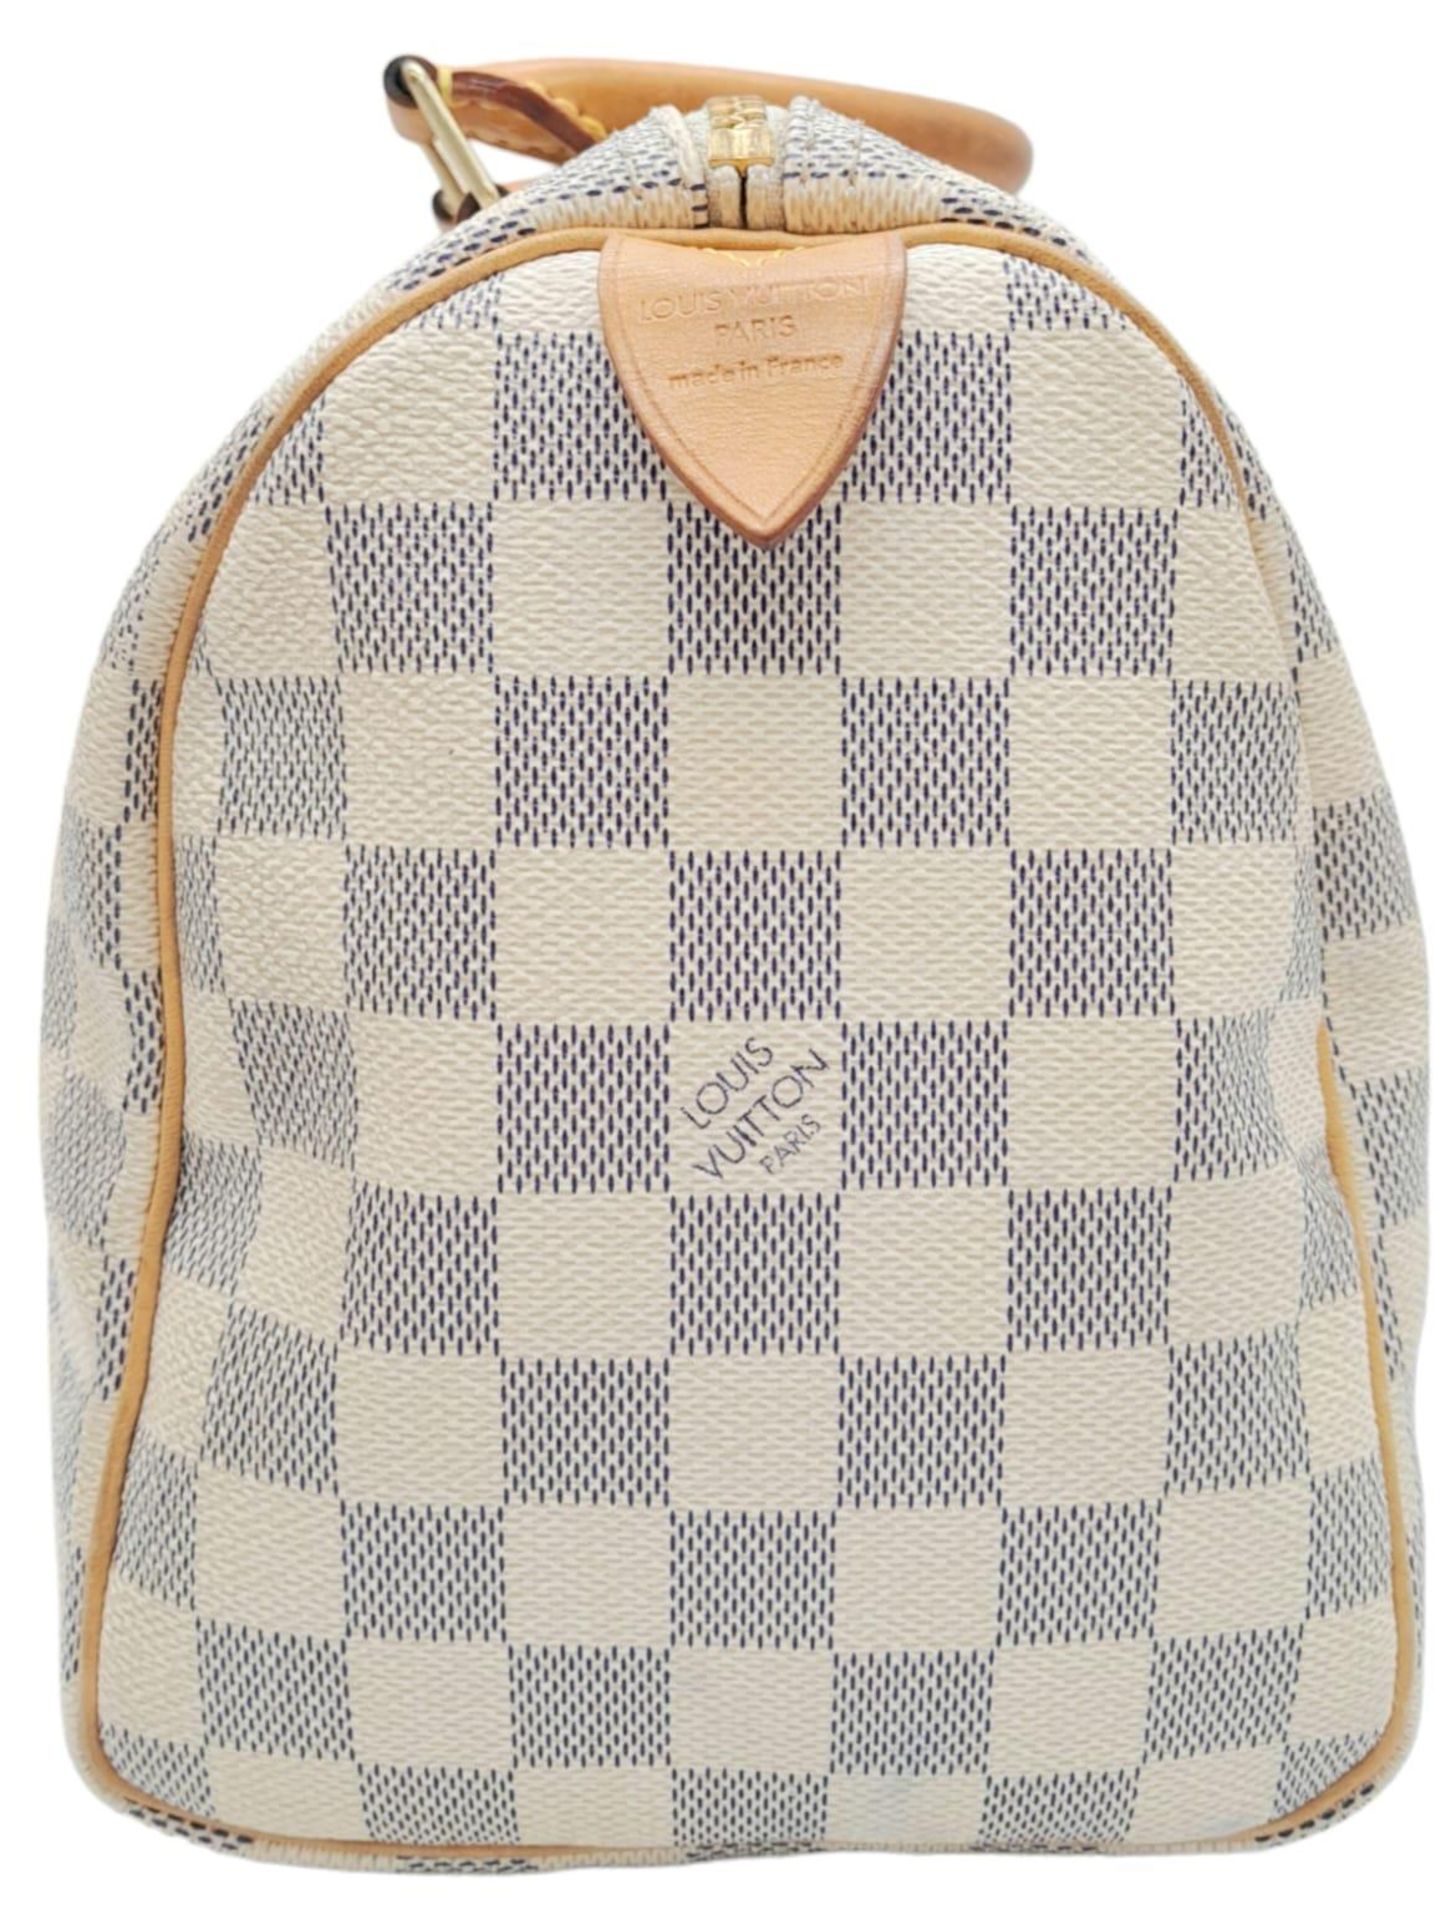 A Louis Vuitton White Canvas Damier Azur Speedy Handbag. Leather exterior, Rolled leather handles, a - Bild 3 aus 7